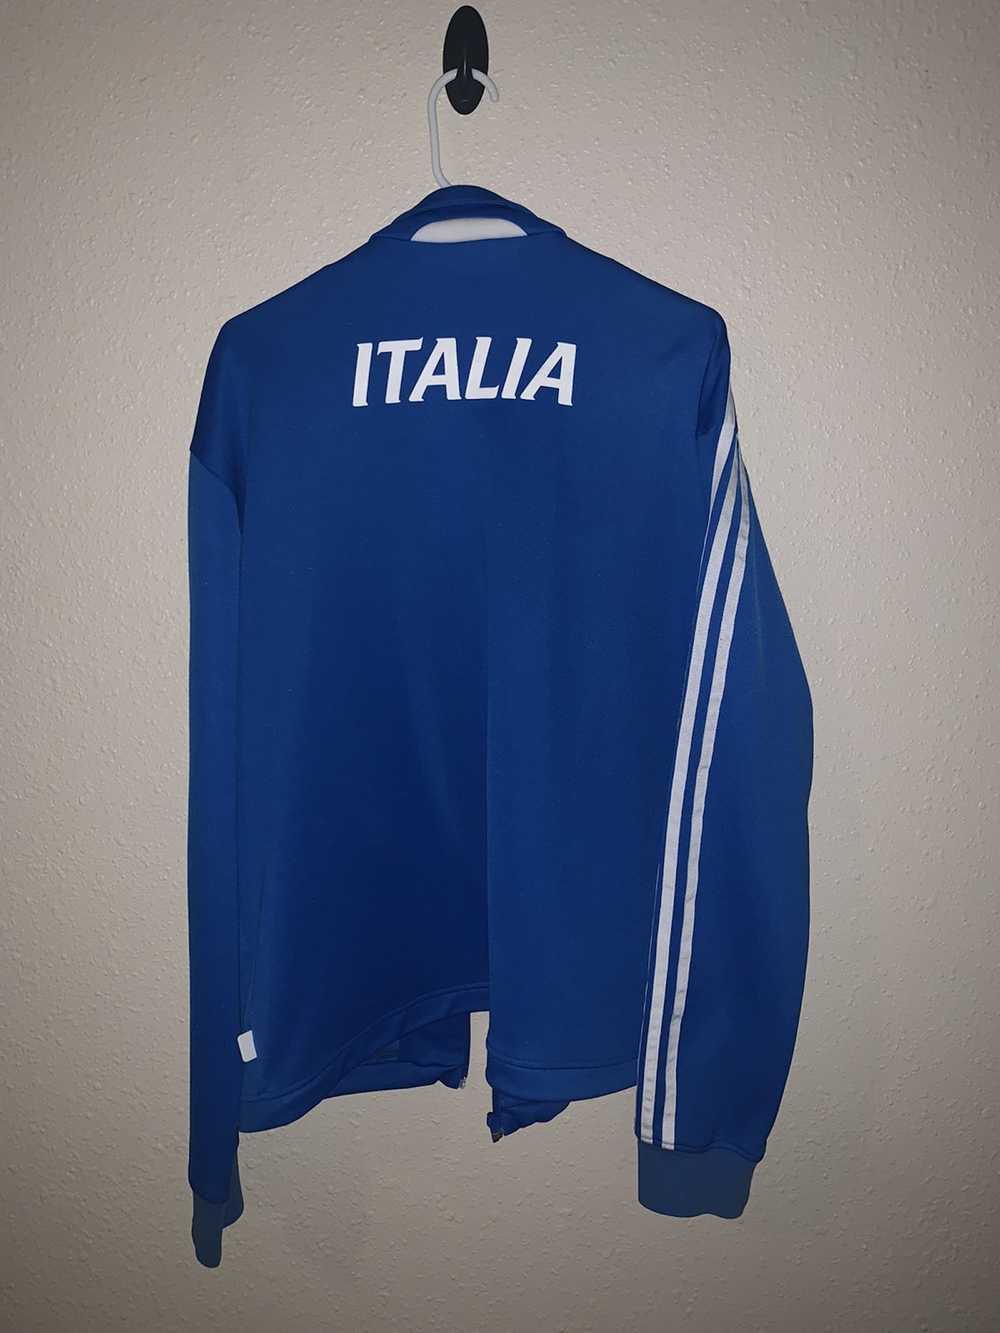 Adidas Adidas ITALIA soccer sweatshirt - image 2